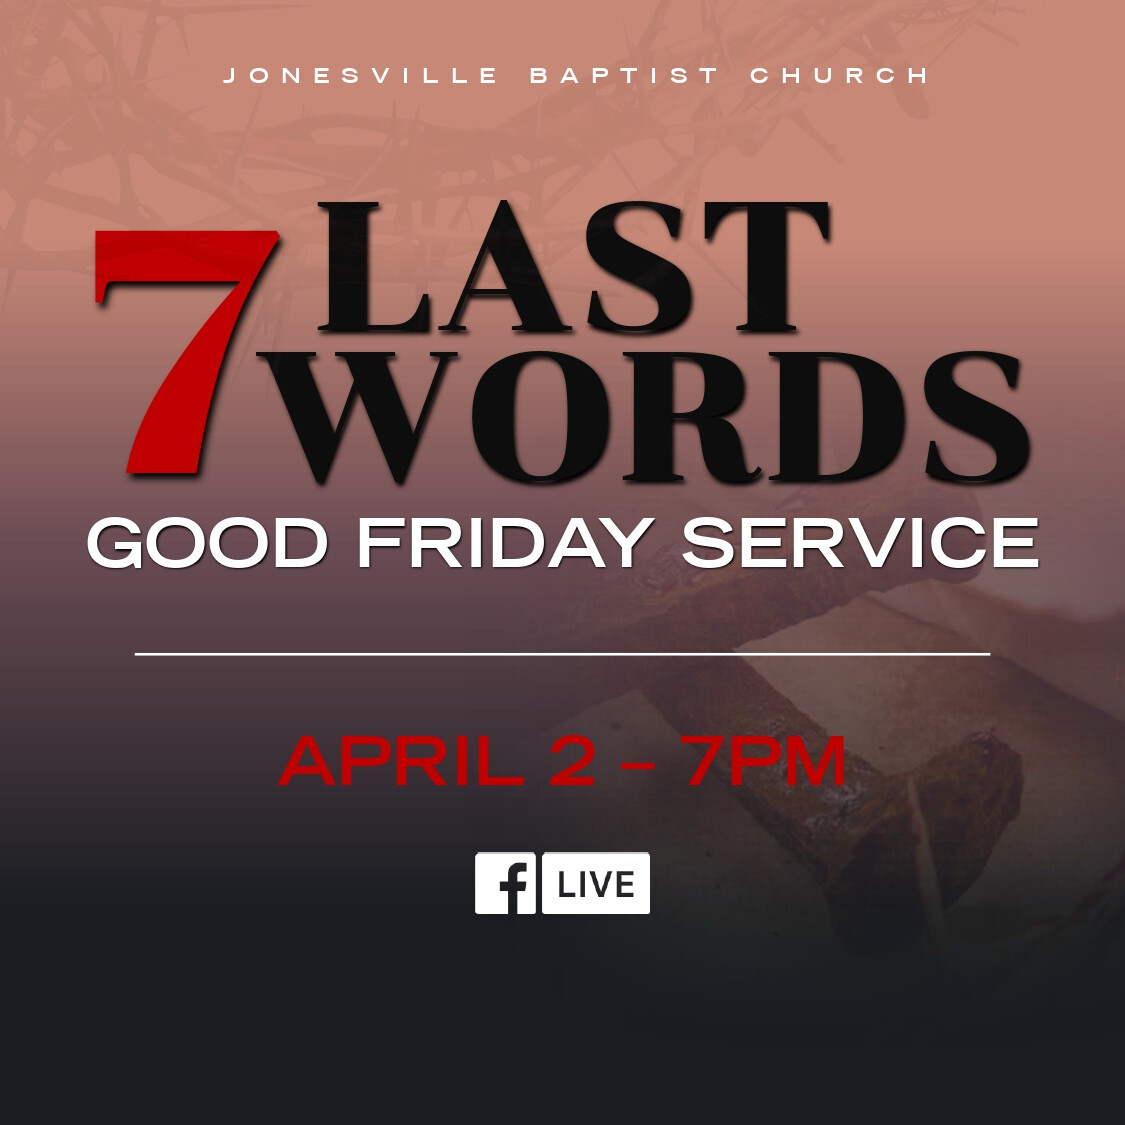 7 Last Words Good Friday Service